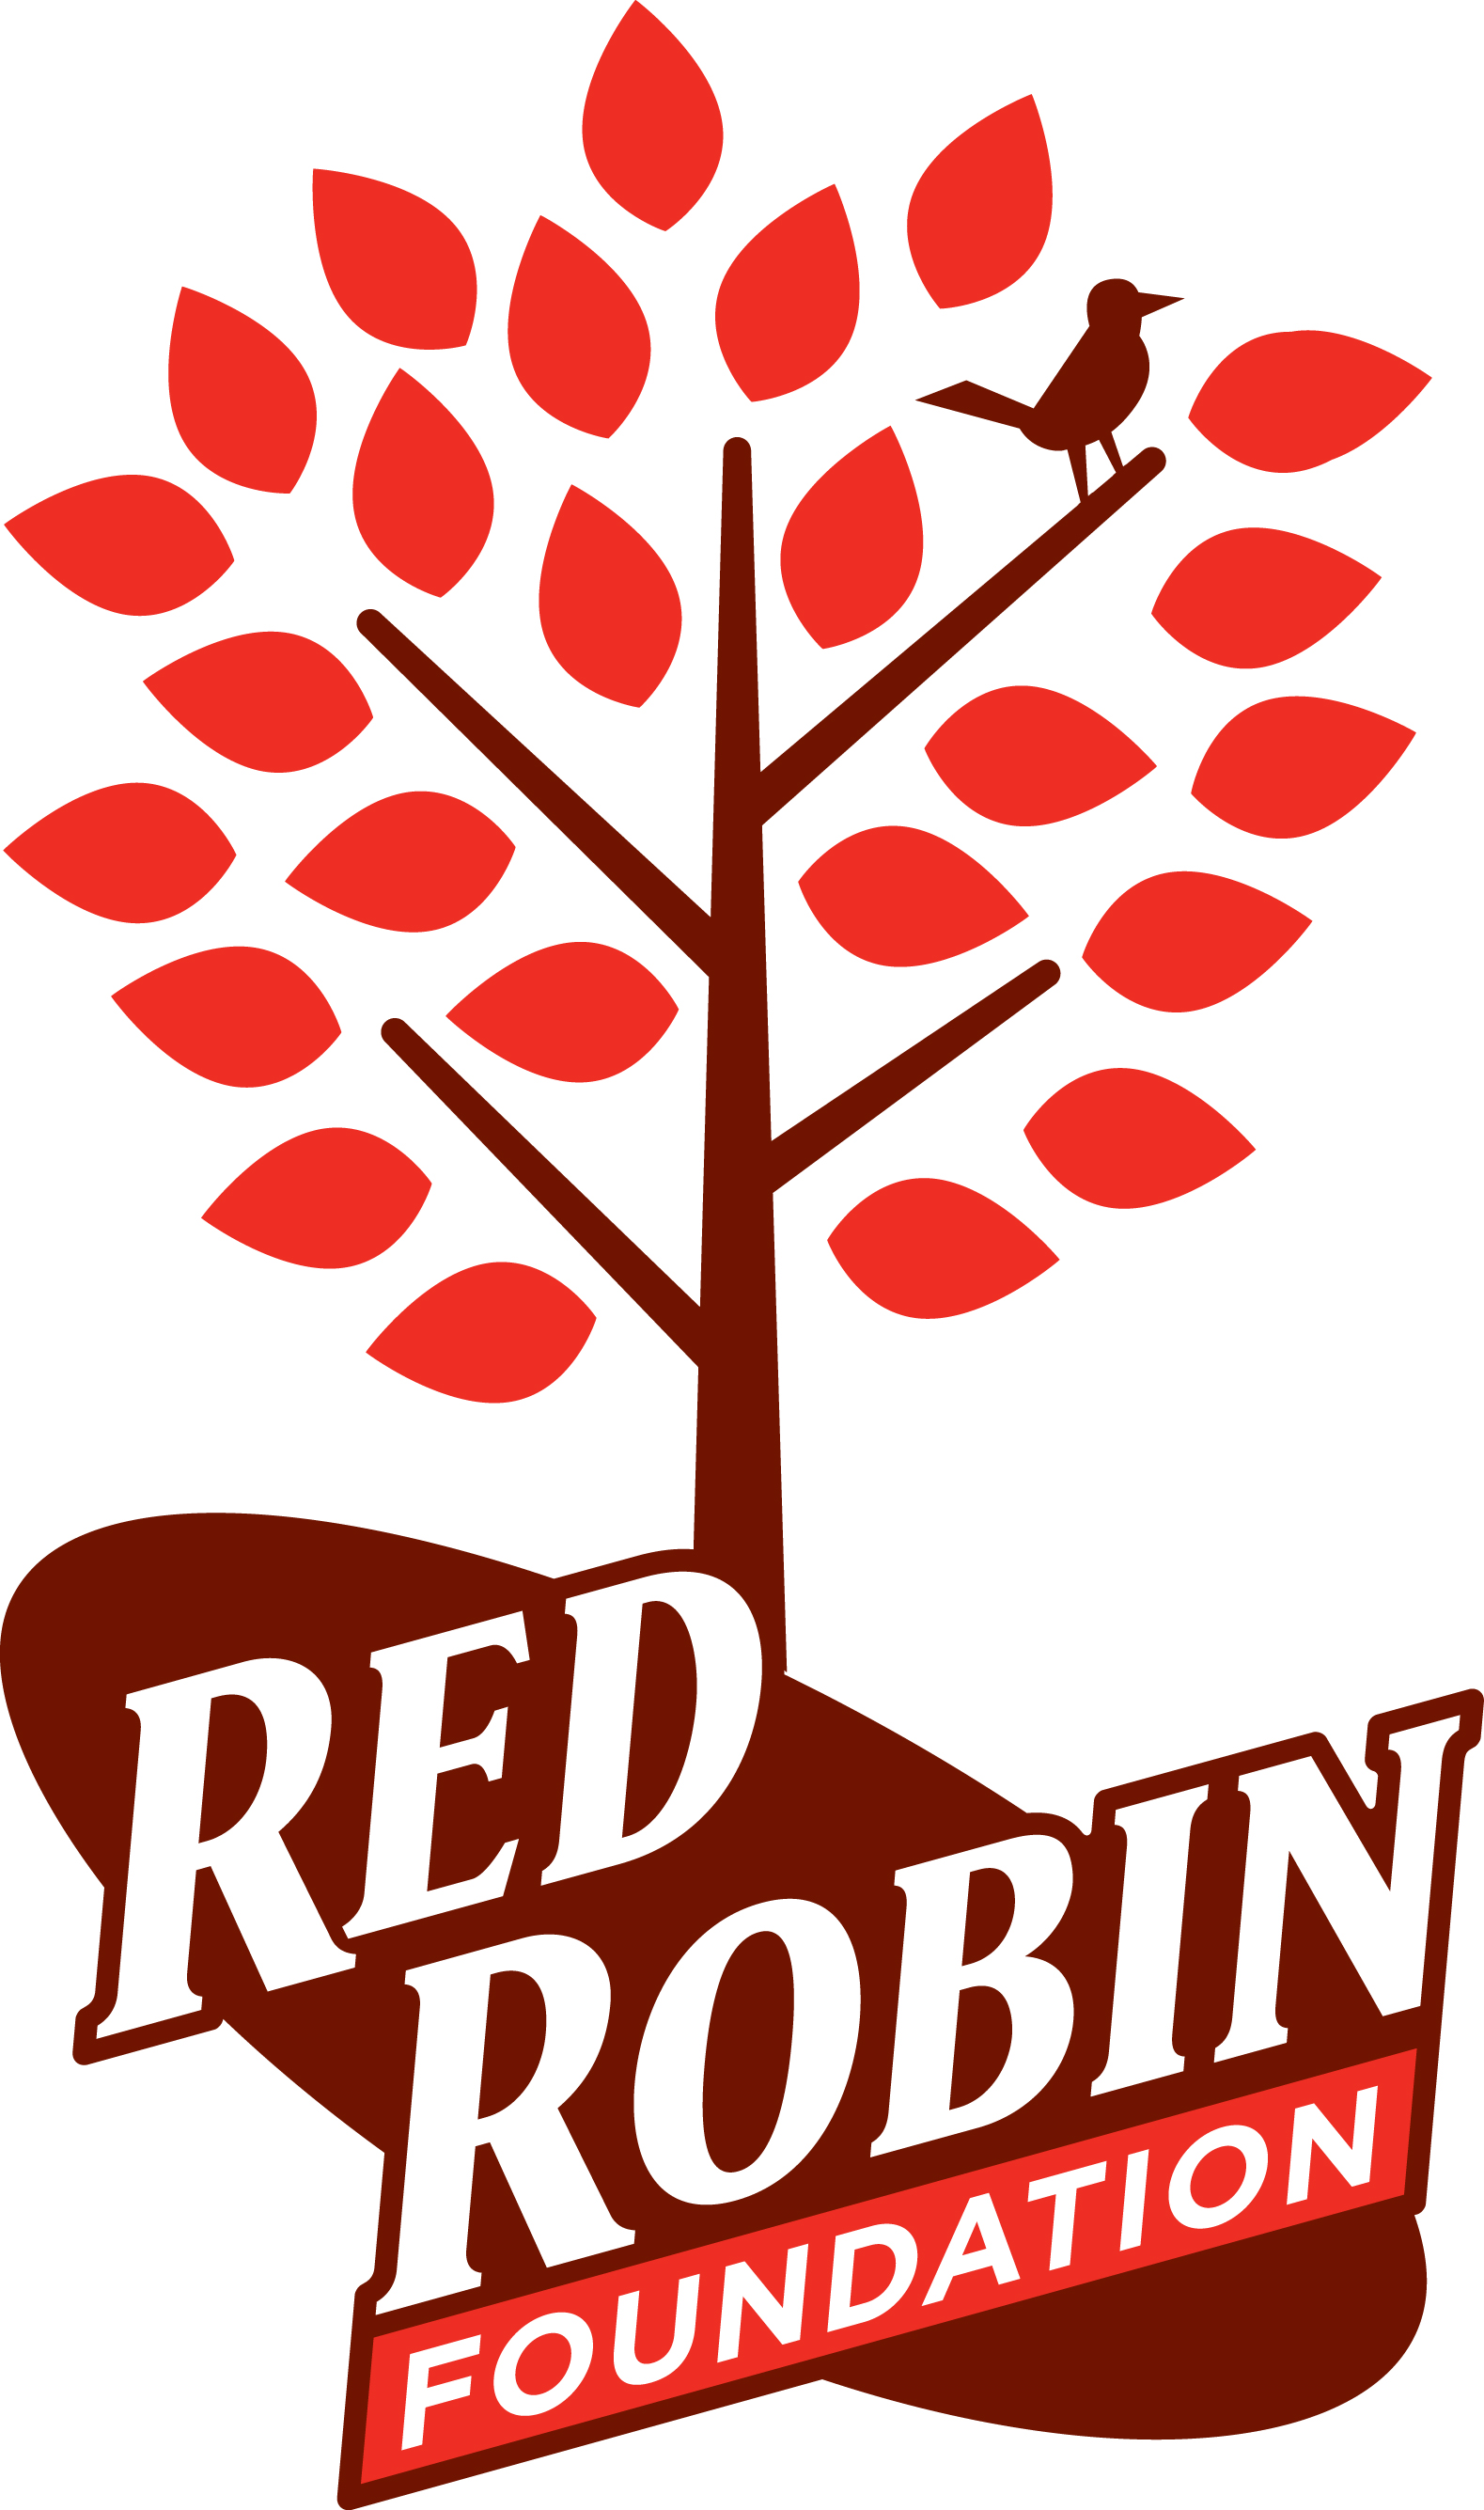 Red Robin Foundation logo